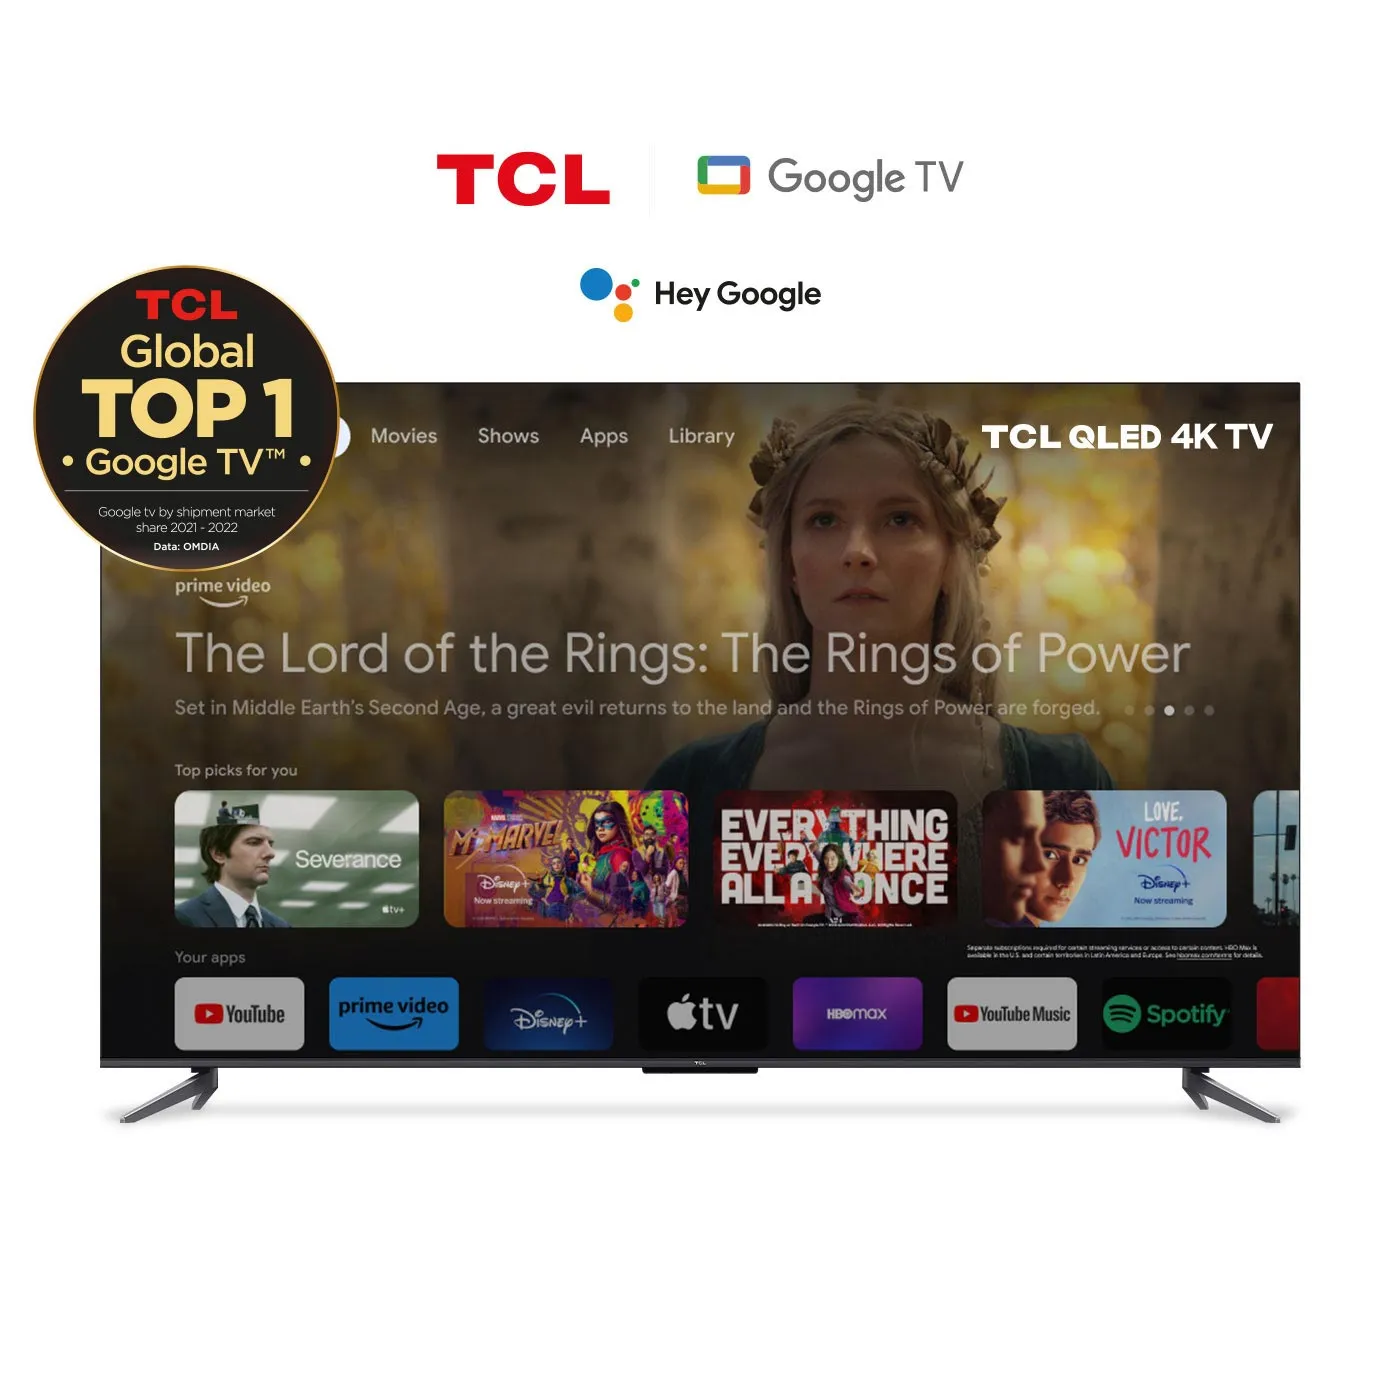 TV TCL 85" Pulgadas 215.9 cm 85C645 4K-UHD QLED Smart TV Google